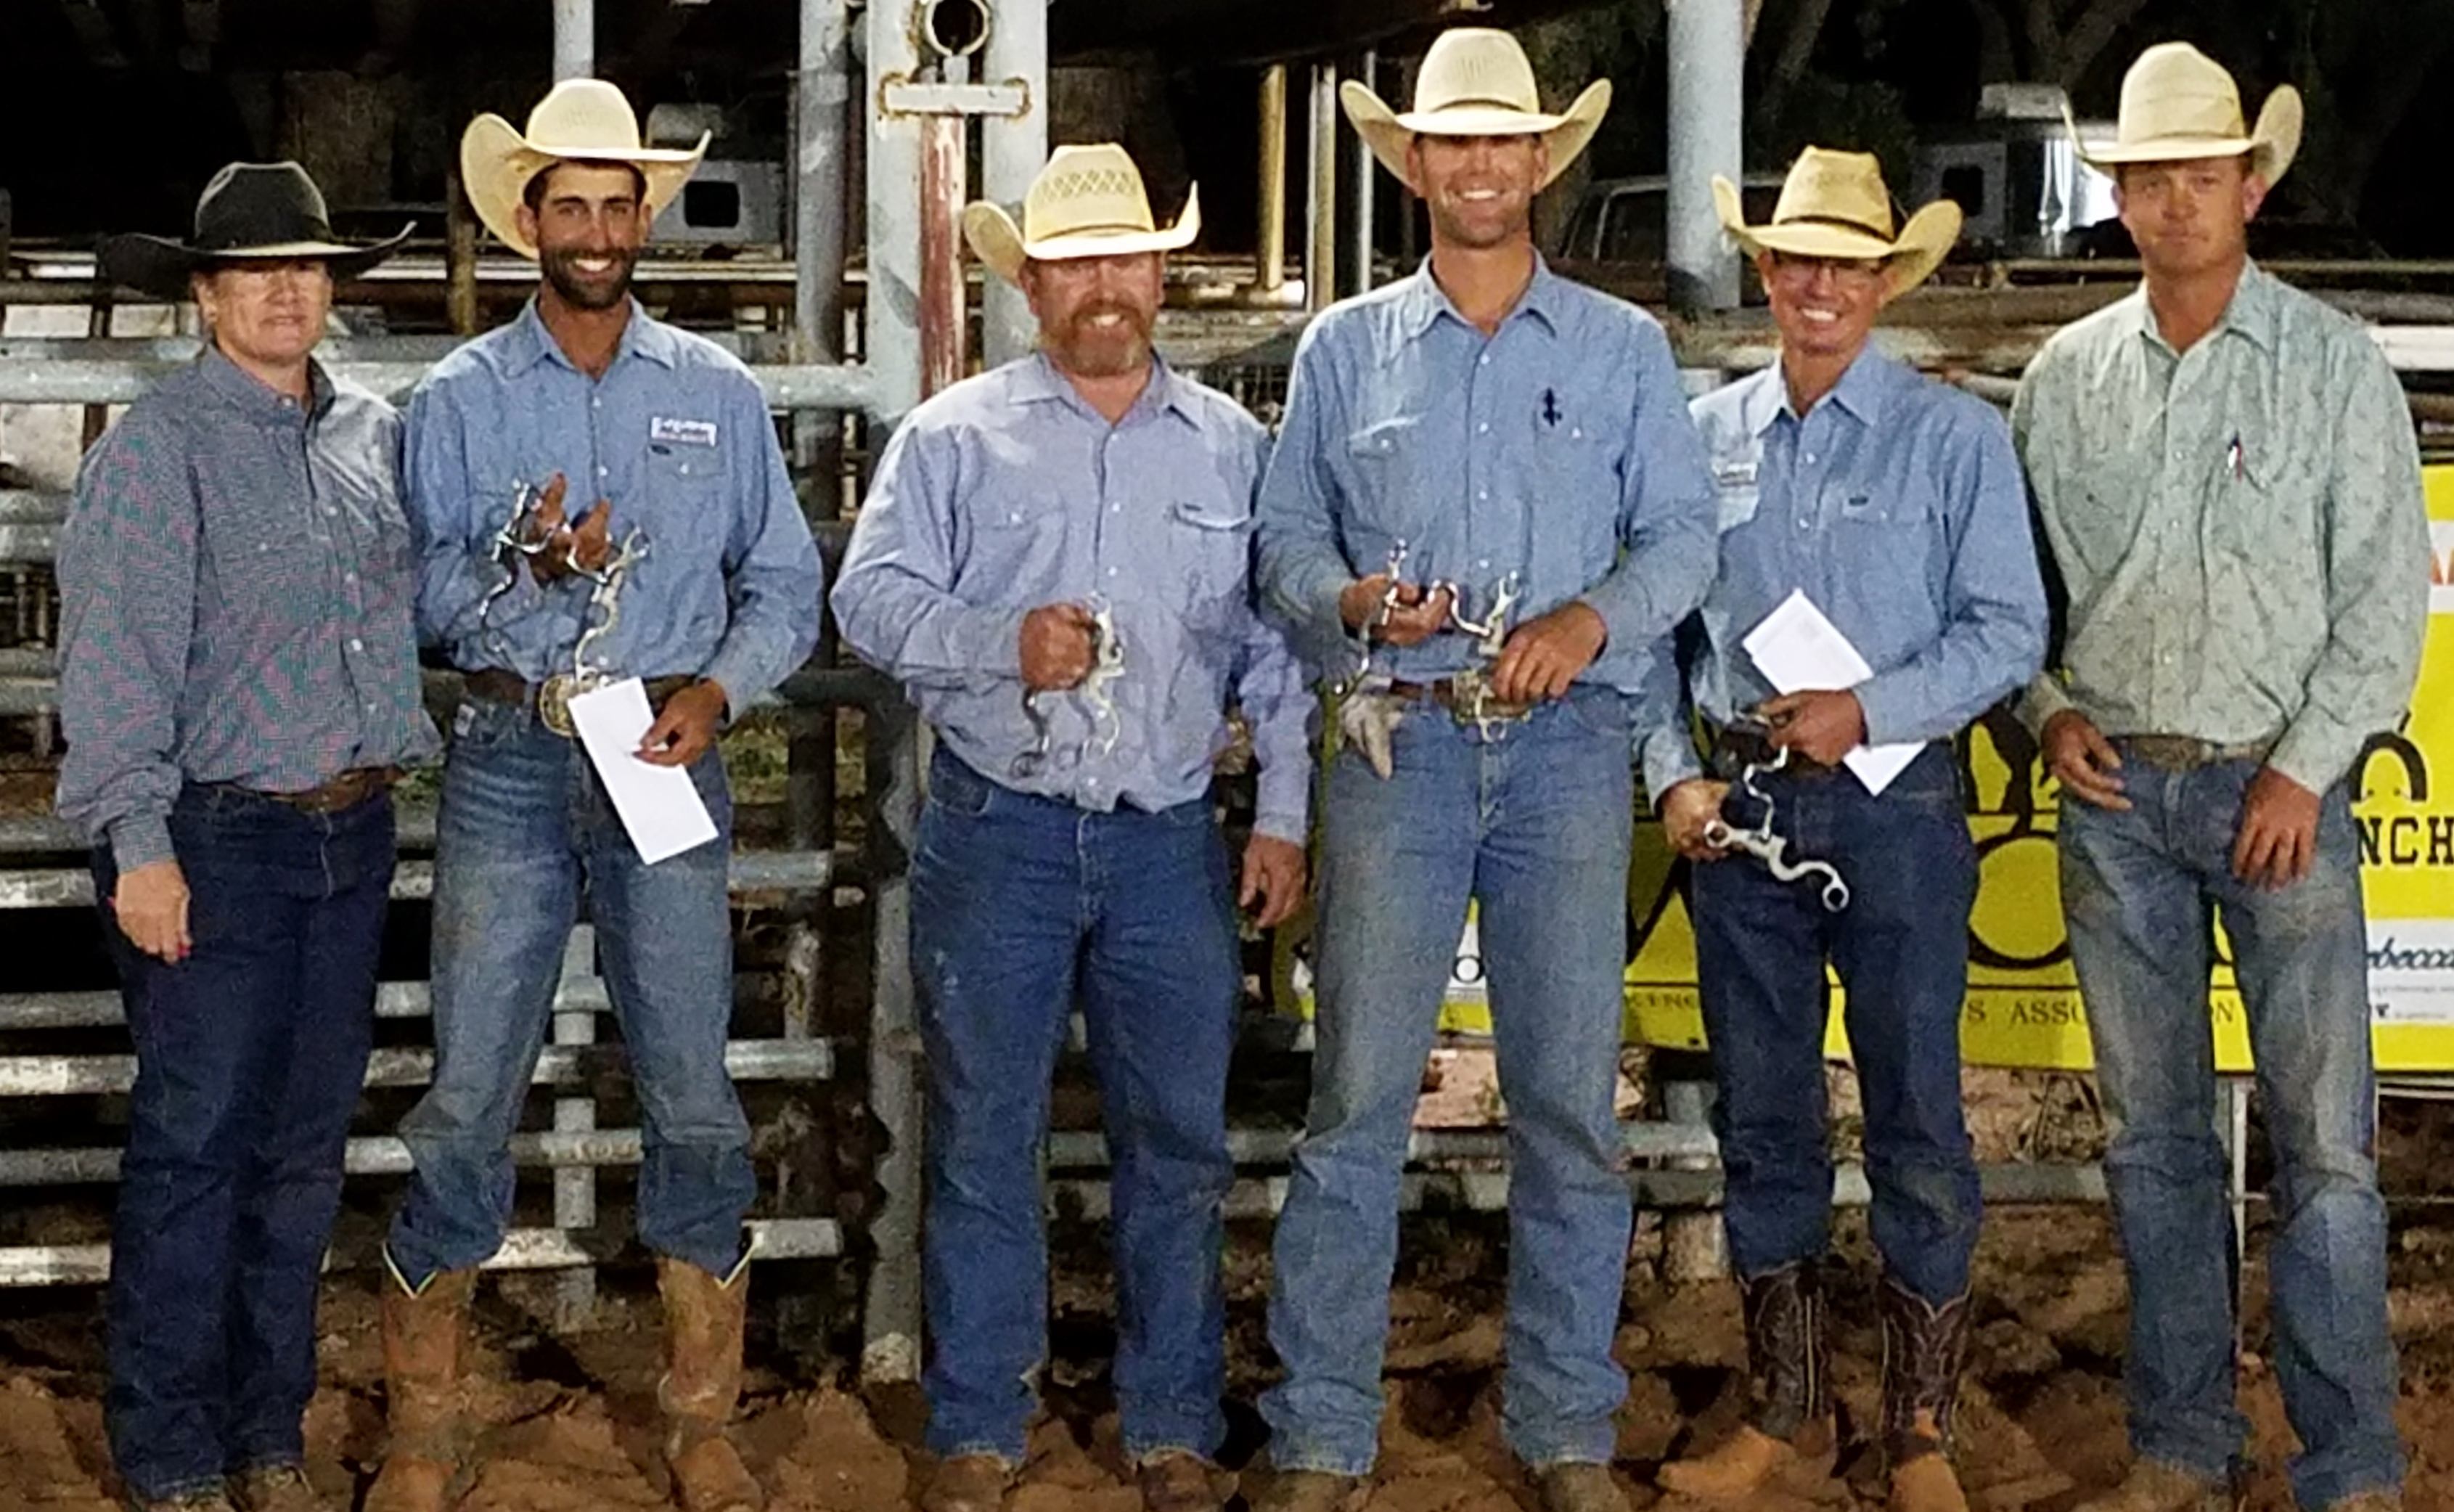 2017 Fort Sumner Winning Ranch Team Sandhill Cattle Co